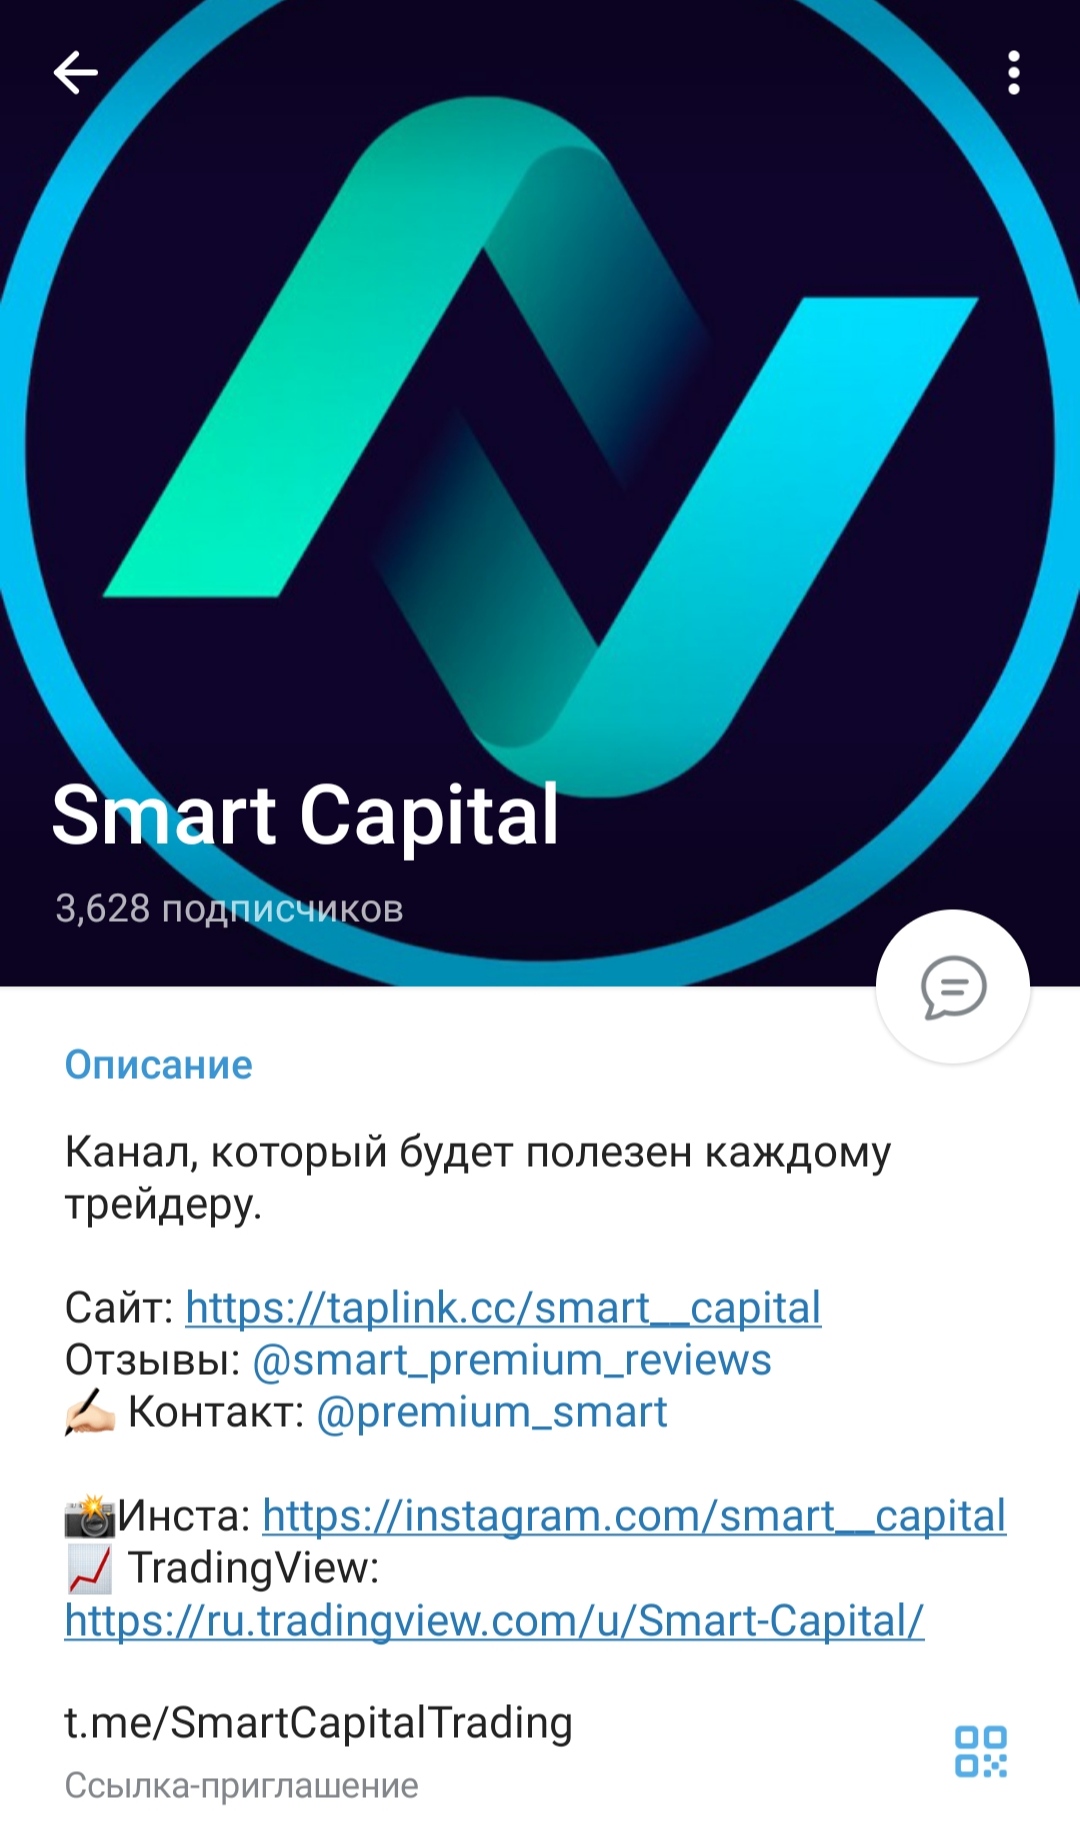 Smart Capital Trading телеграм